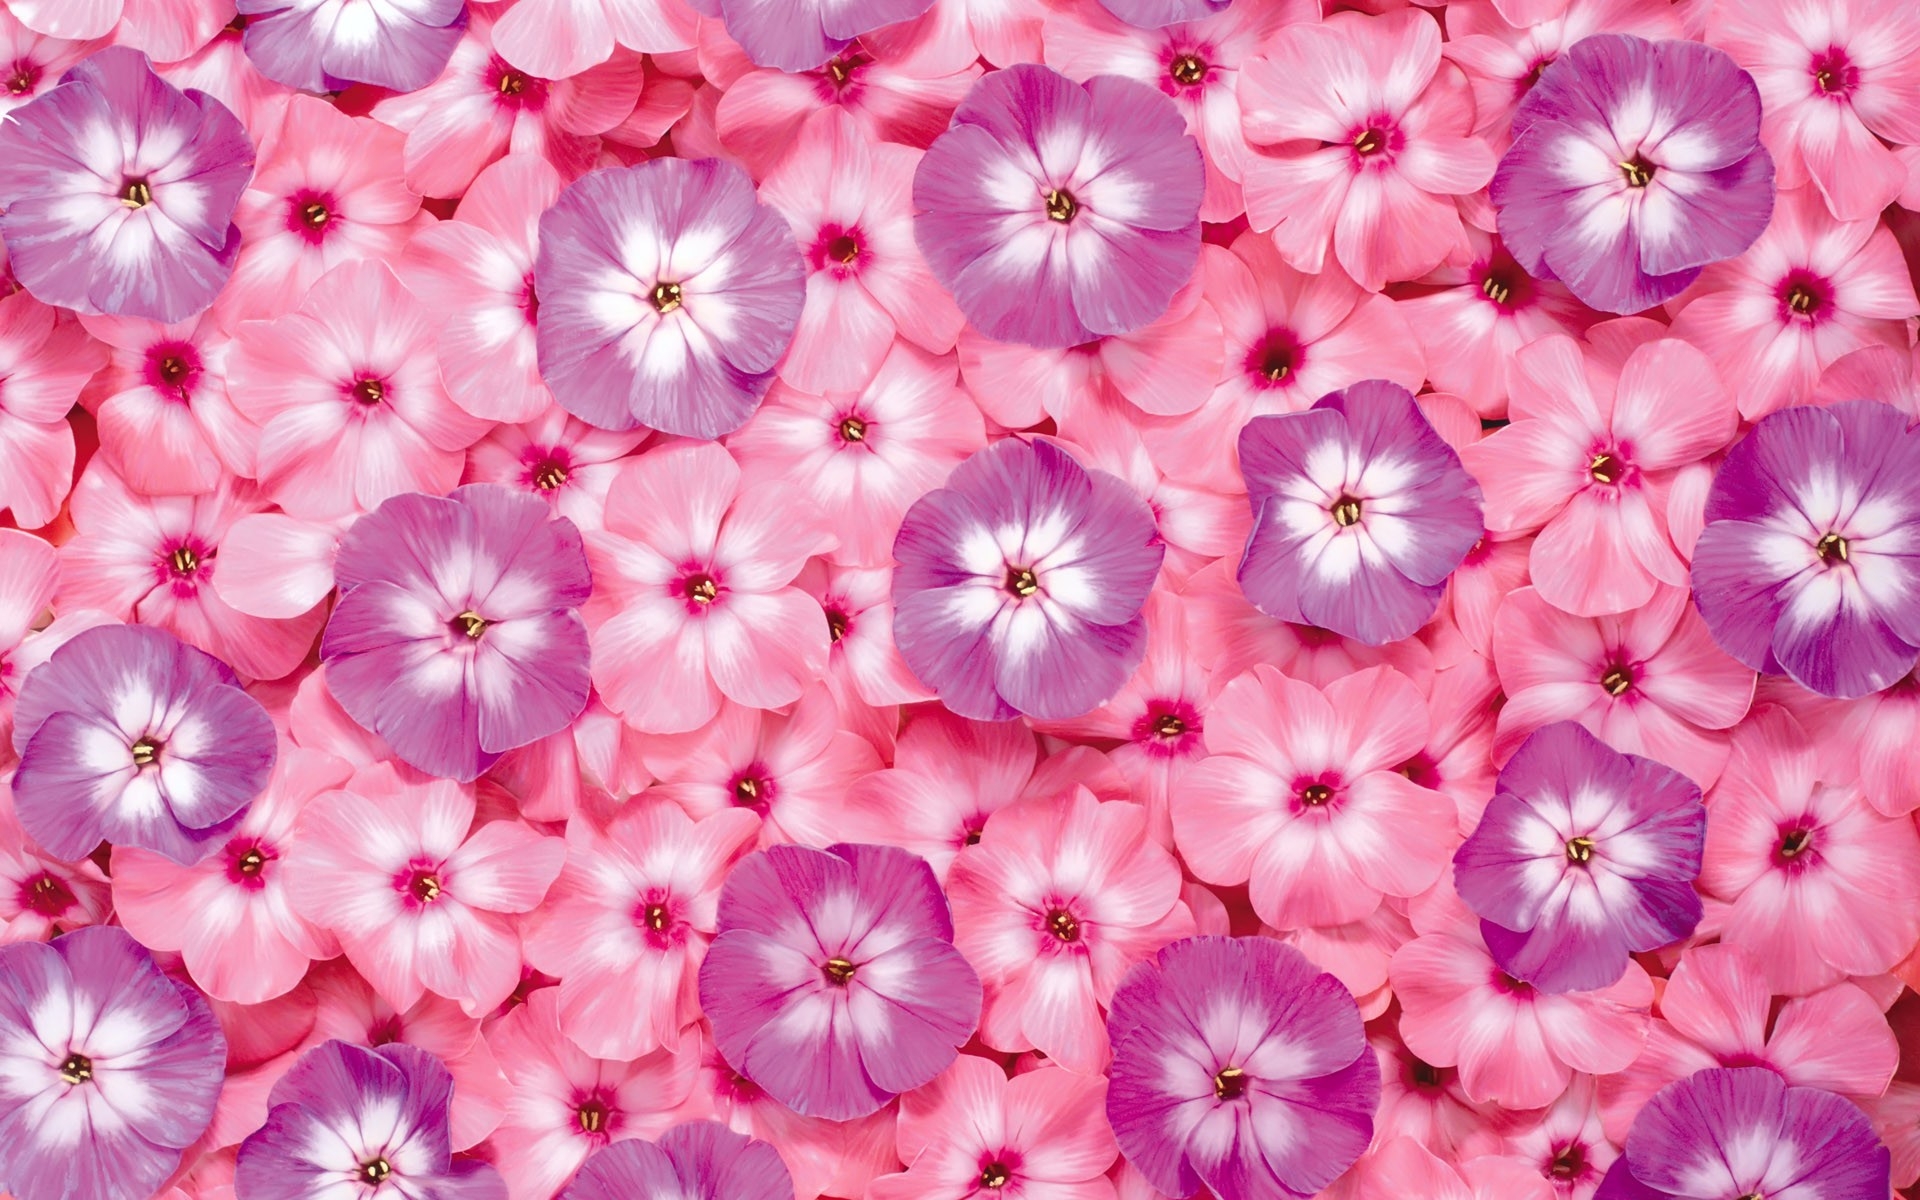 earth, phlox, flower, nature, pink flower, purple flower, flowers wallpaper for mobile